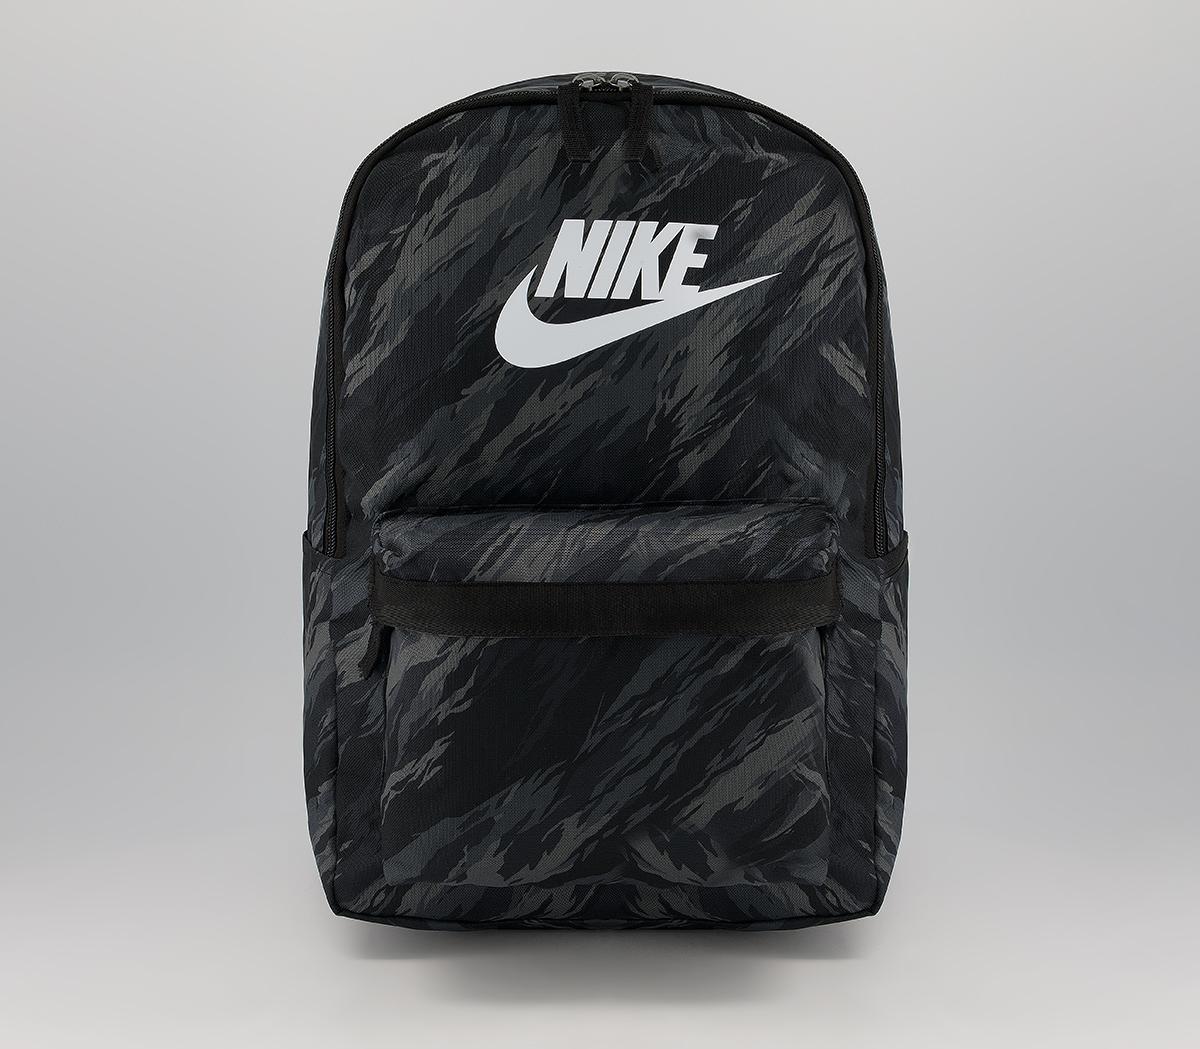  NIKE Luggage Casual, Black/Black/(White), 17 x 23 x 6 cm : Nike:  Clothing, Shoes & Jewelry